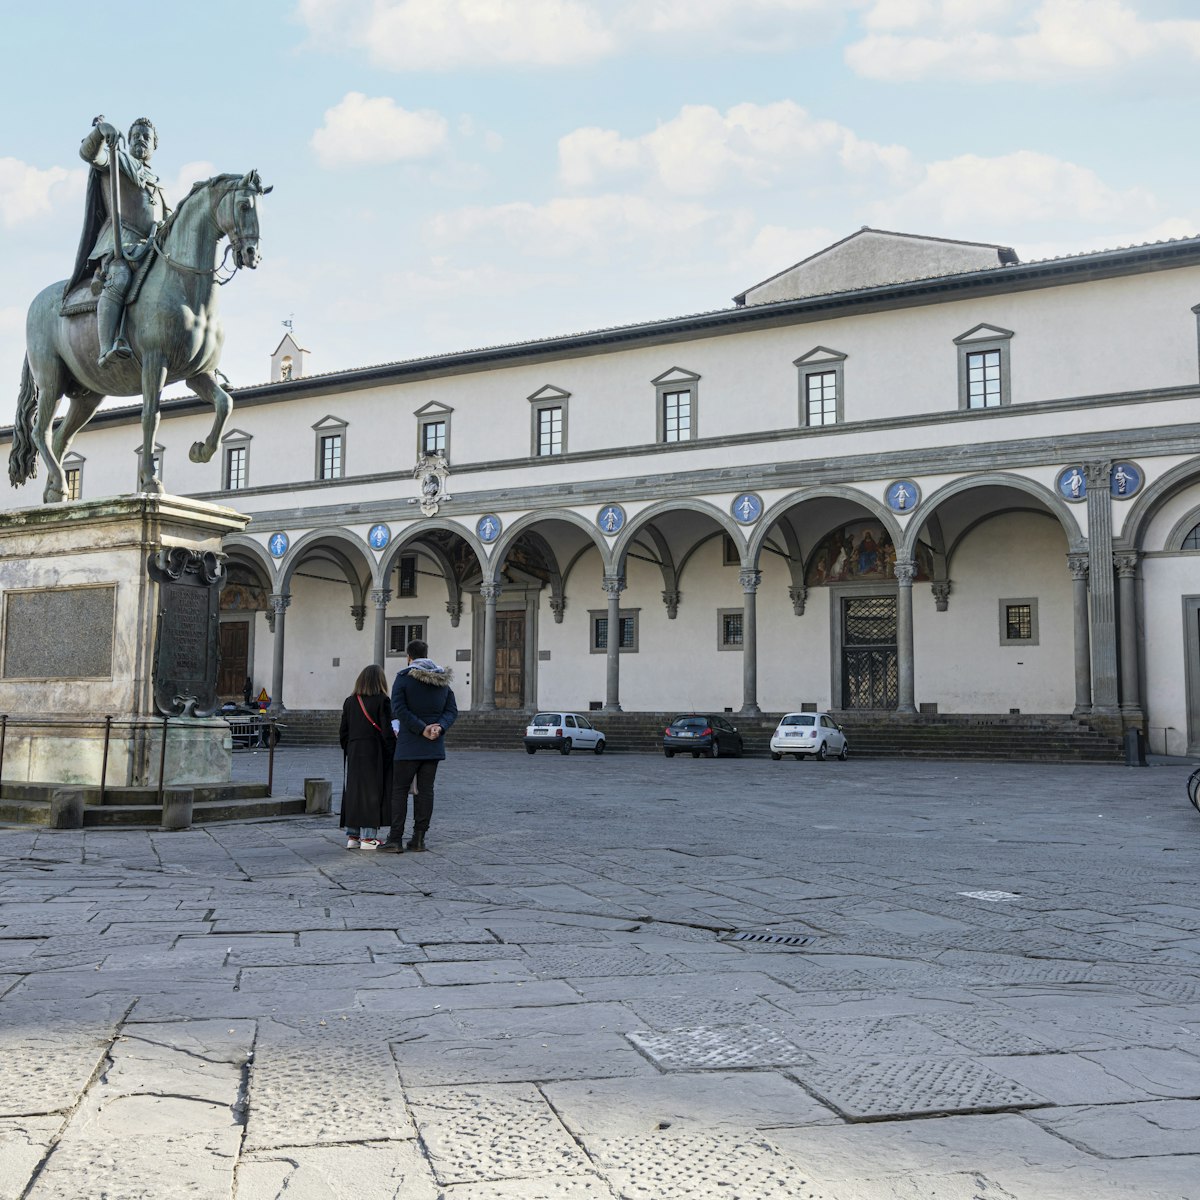 Museo degli Innocenti in Florence, Italy